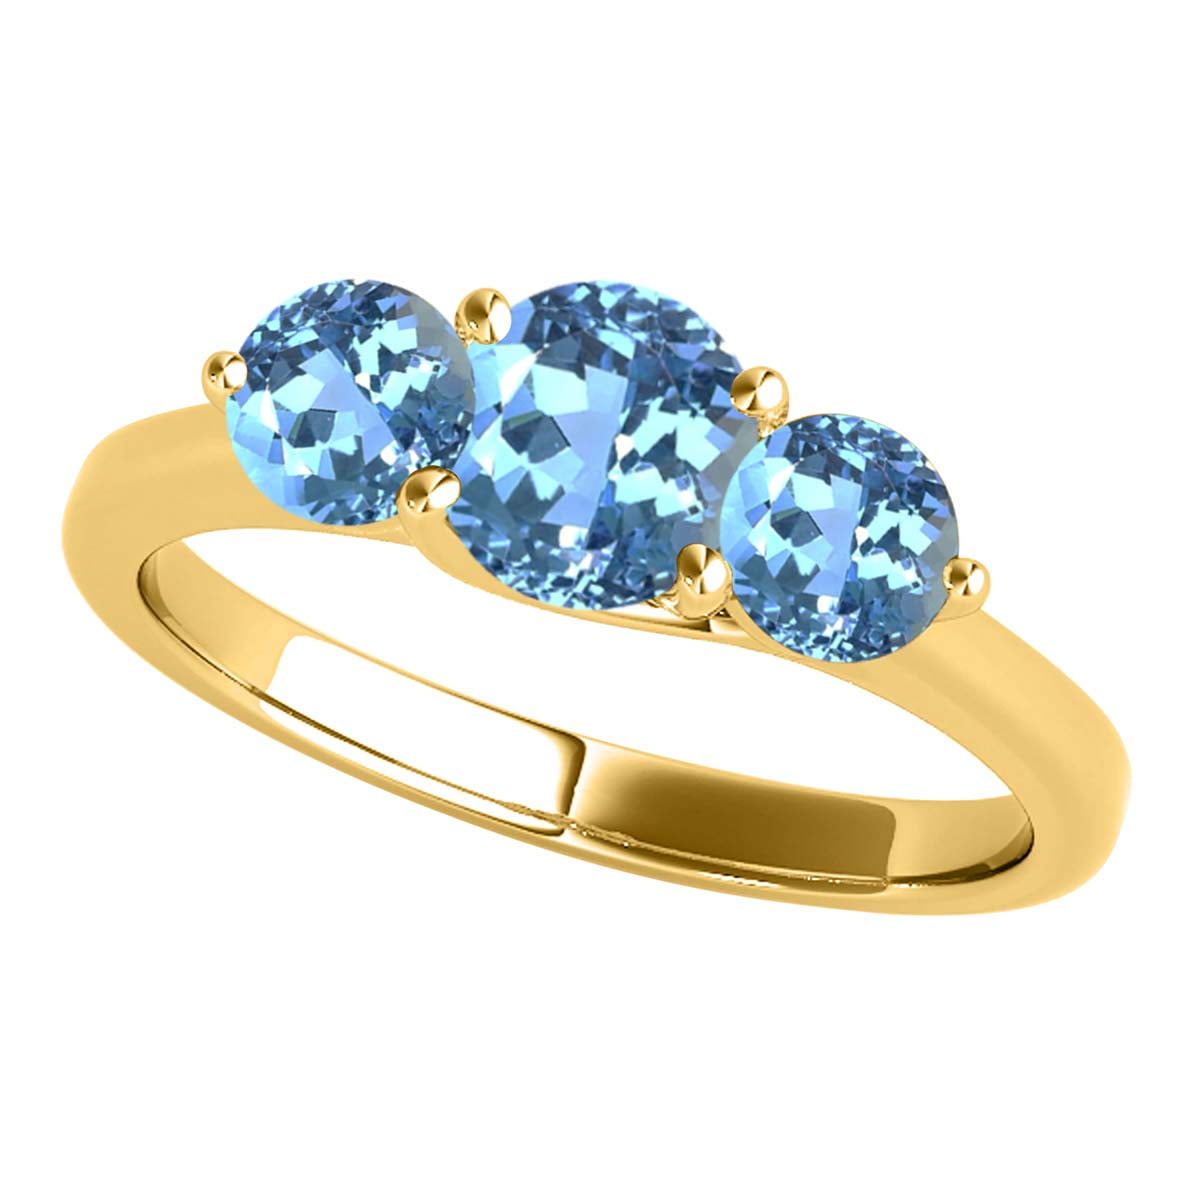 Buy Fancy Cut Golden Topaz Ring in 925 Sterling Silver Online in India -  Etsy | Topaz ring, Rings, Wedding rings